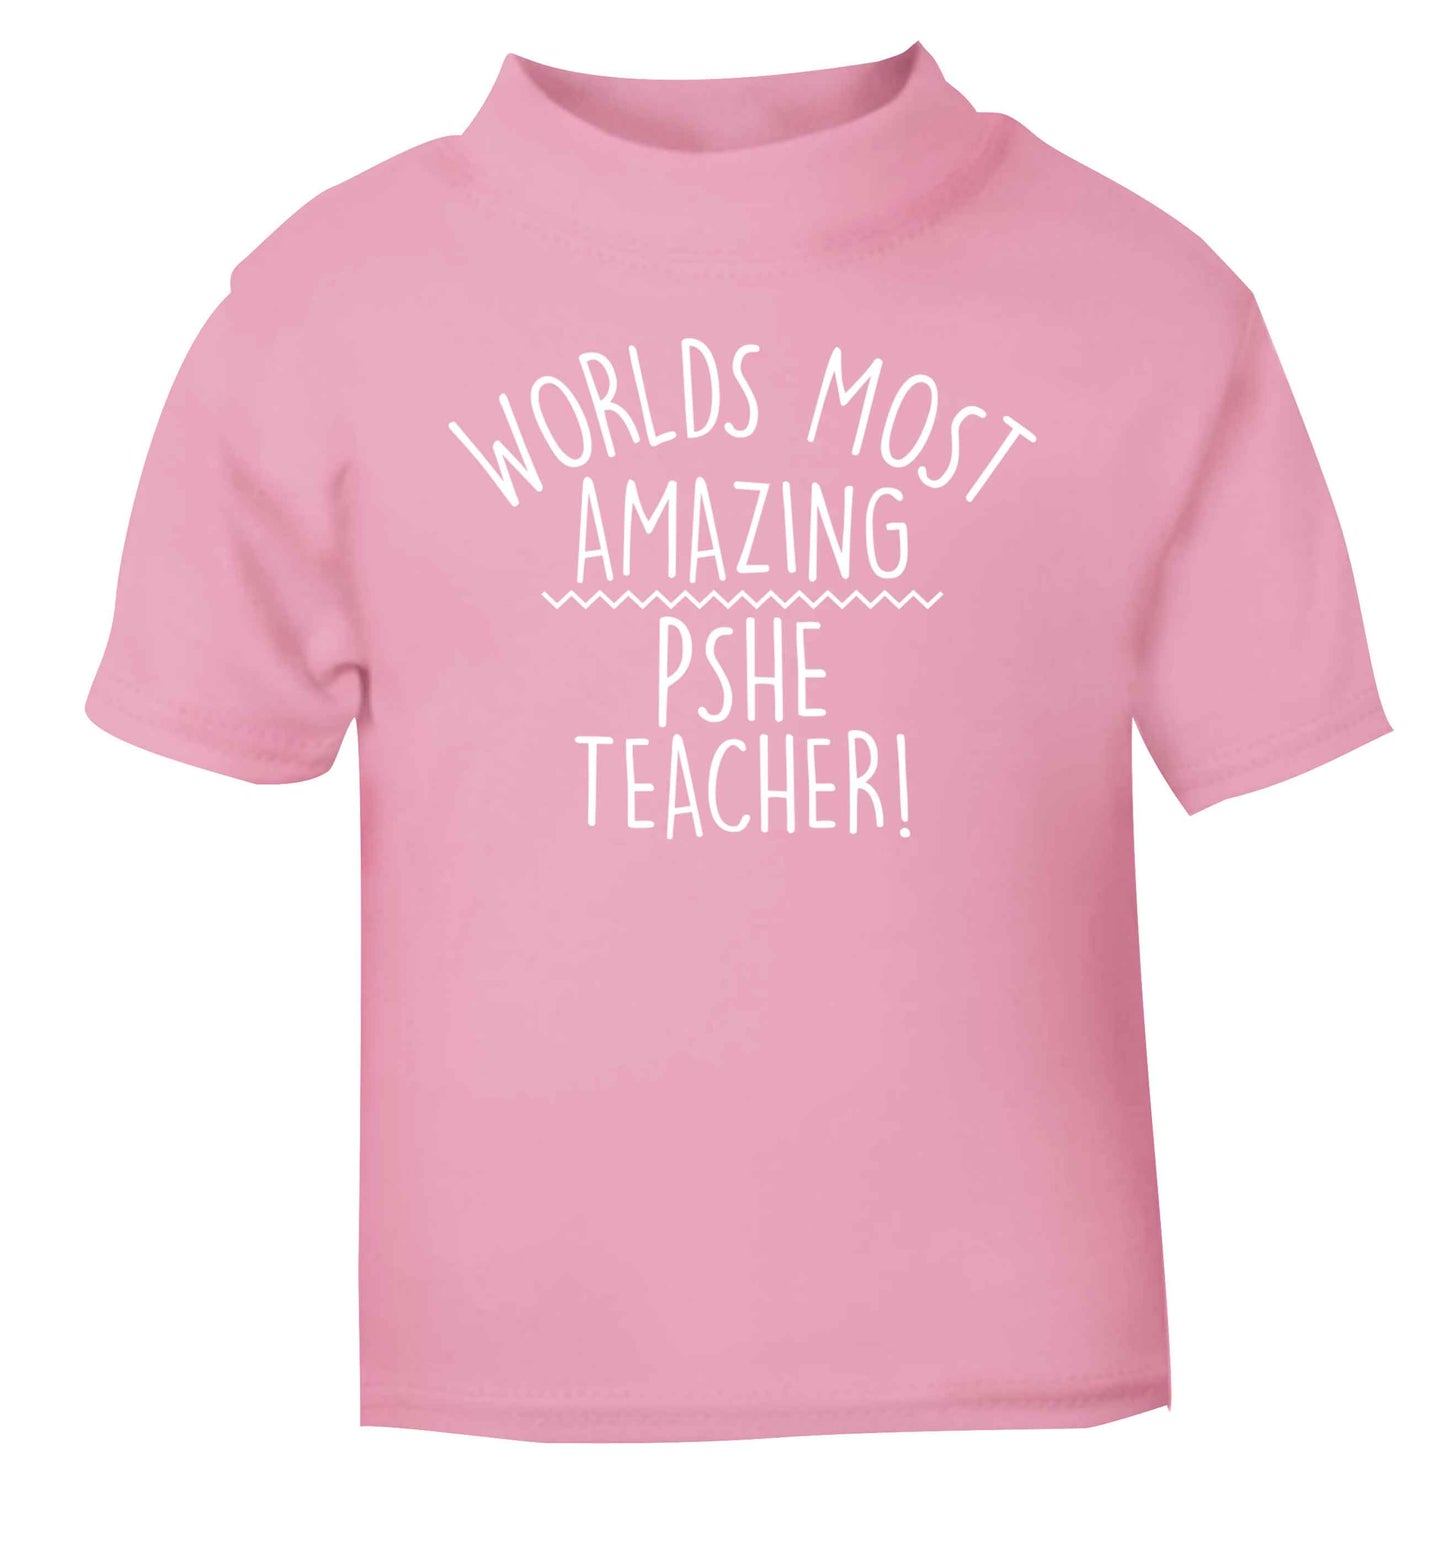 Worlds most amazing PHSE teacher light pink baby toddler Tshirt 2 Years